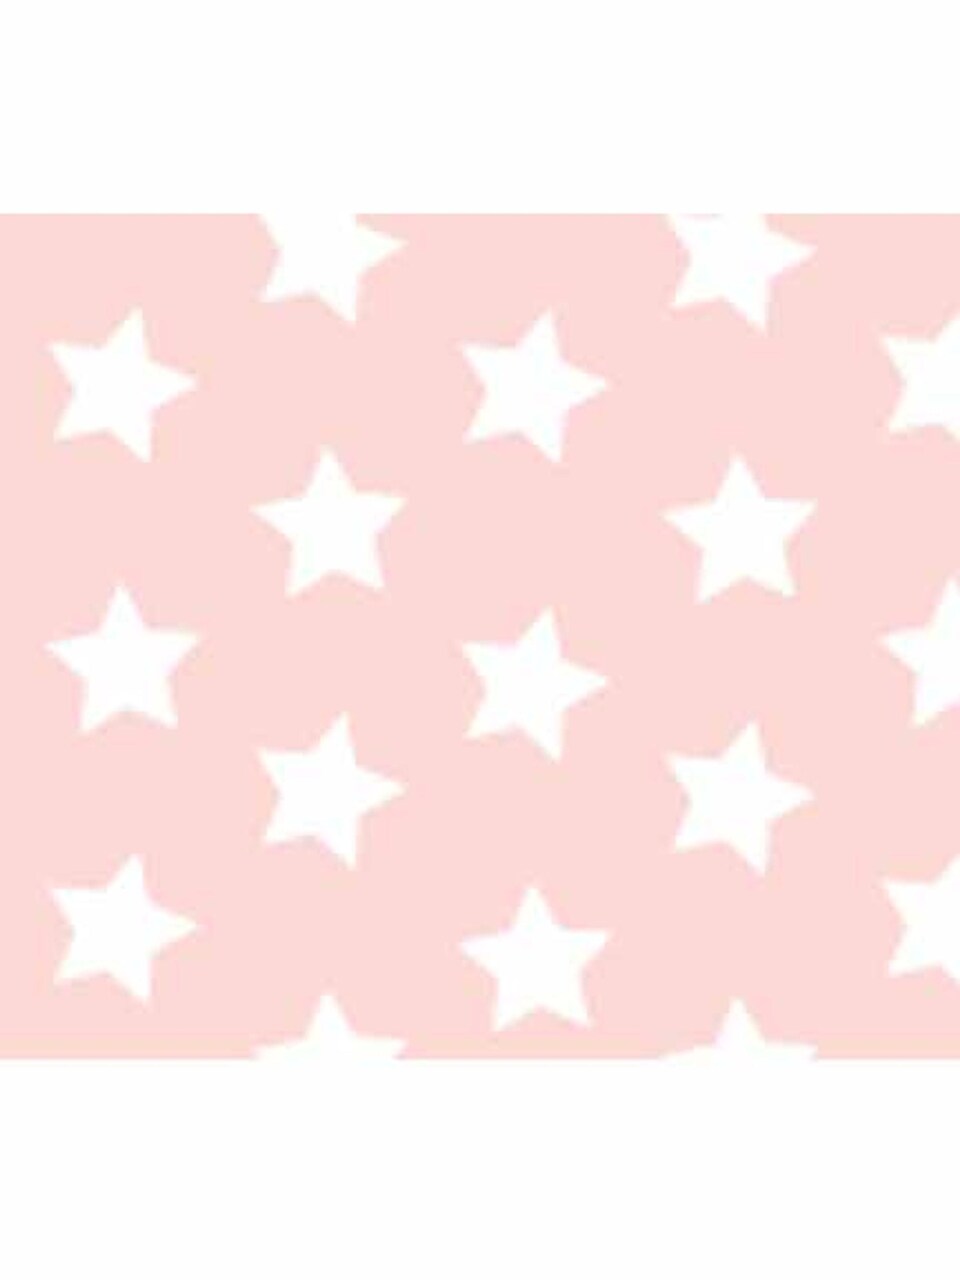 Pergamano Parchment Paper Stars Light Pink